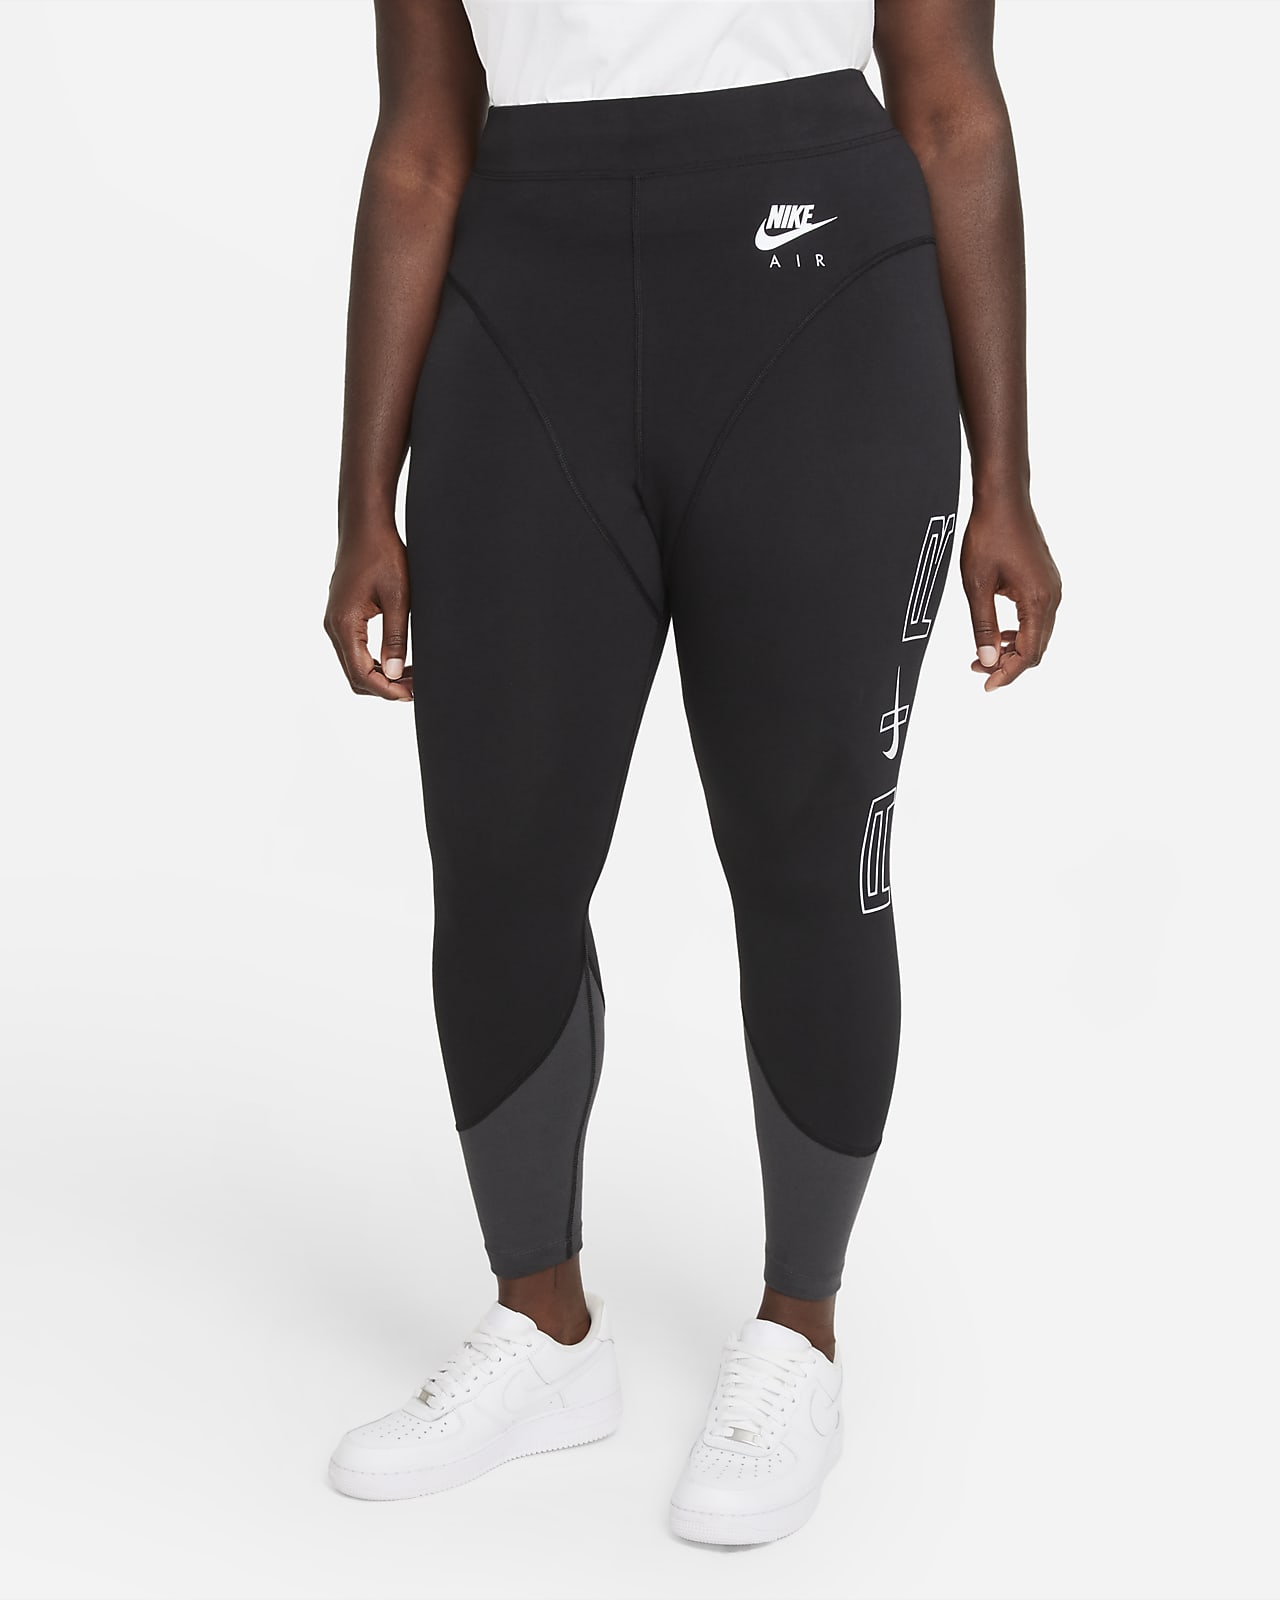 Nike Air Women's High-Rise Leggings. Nike LU